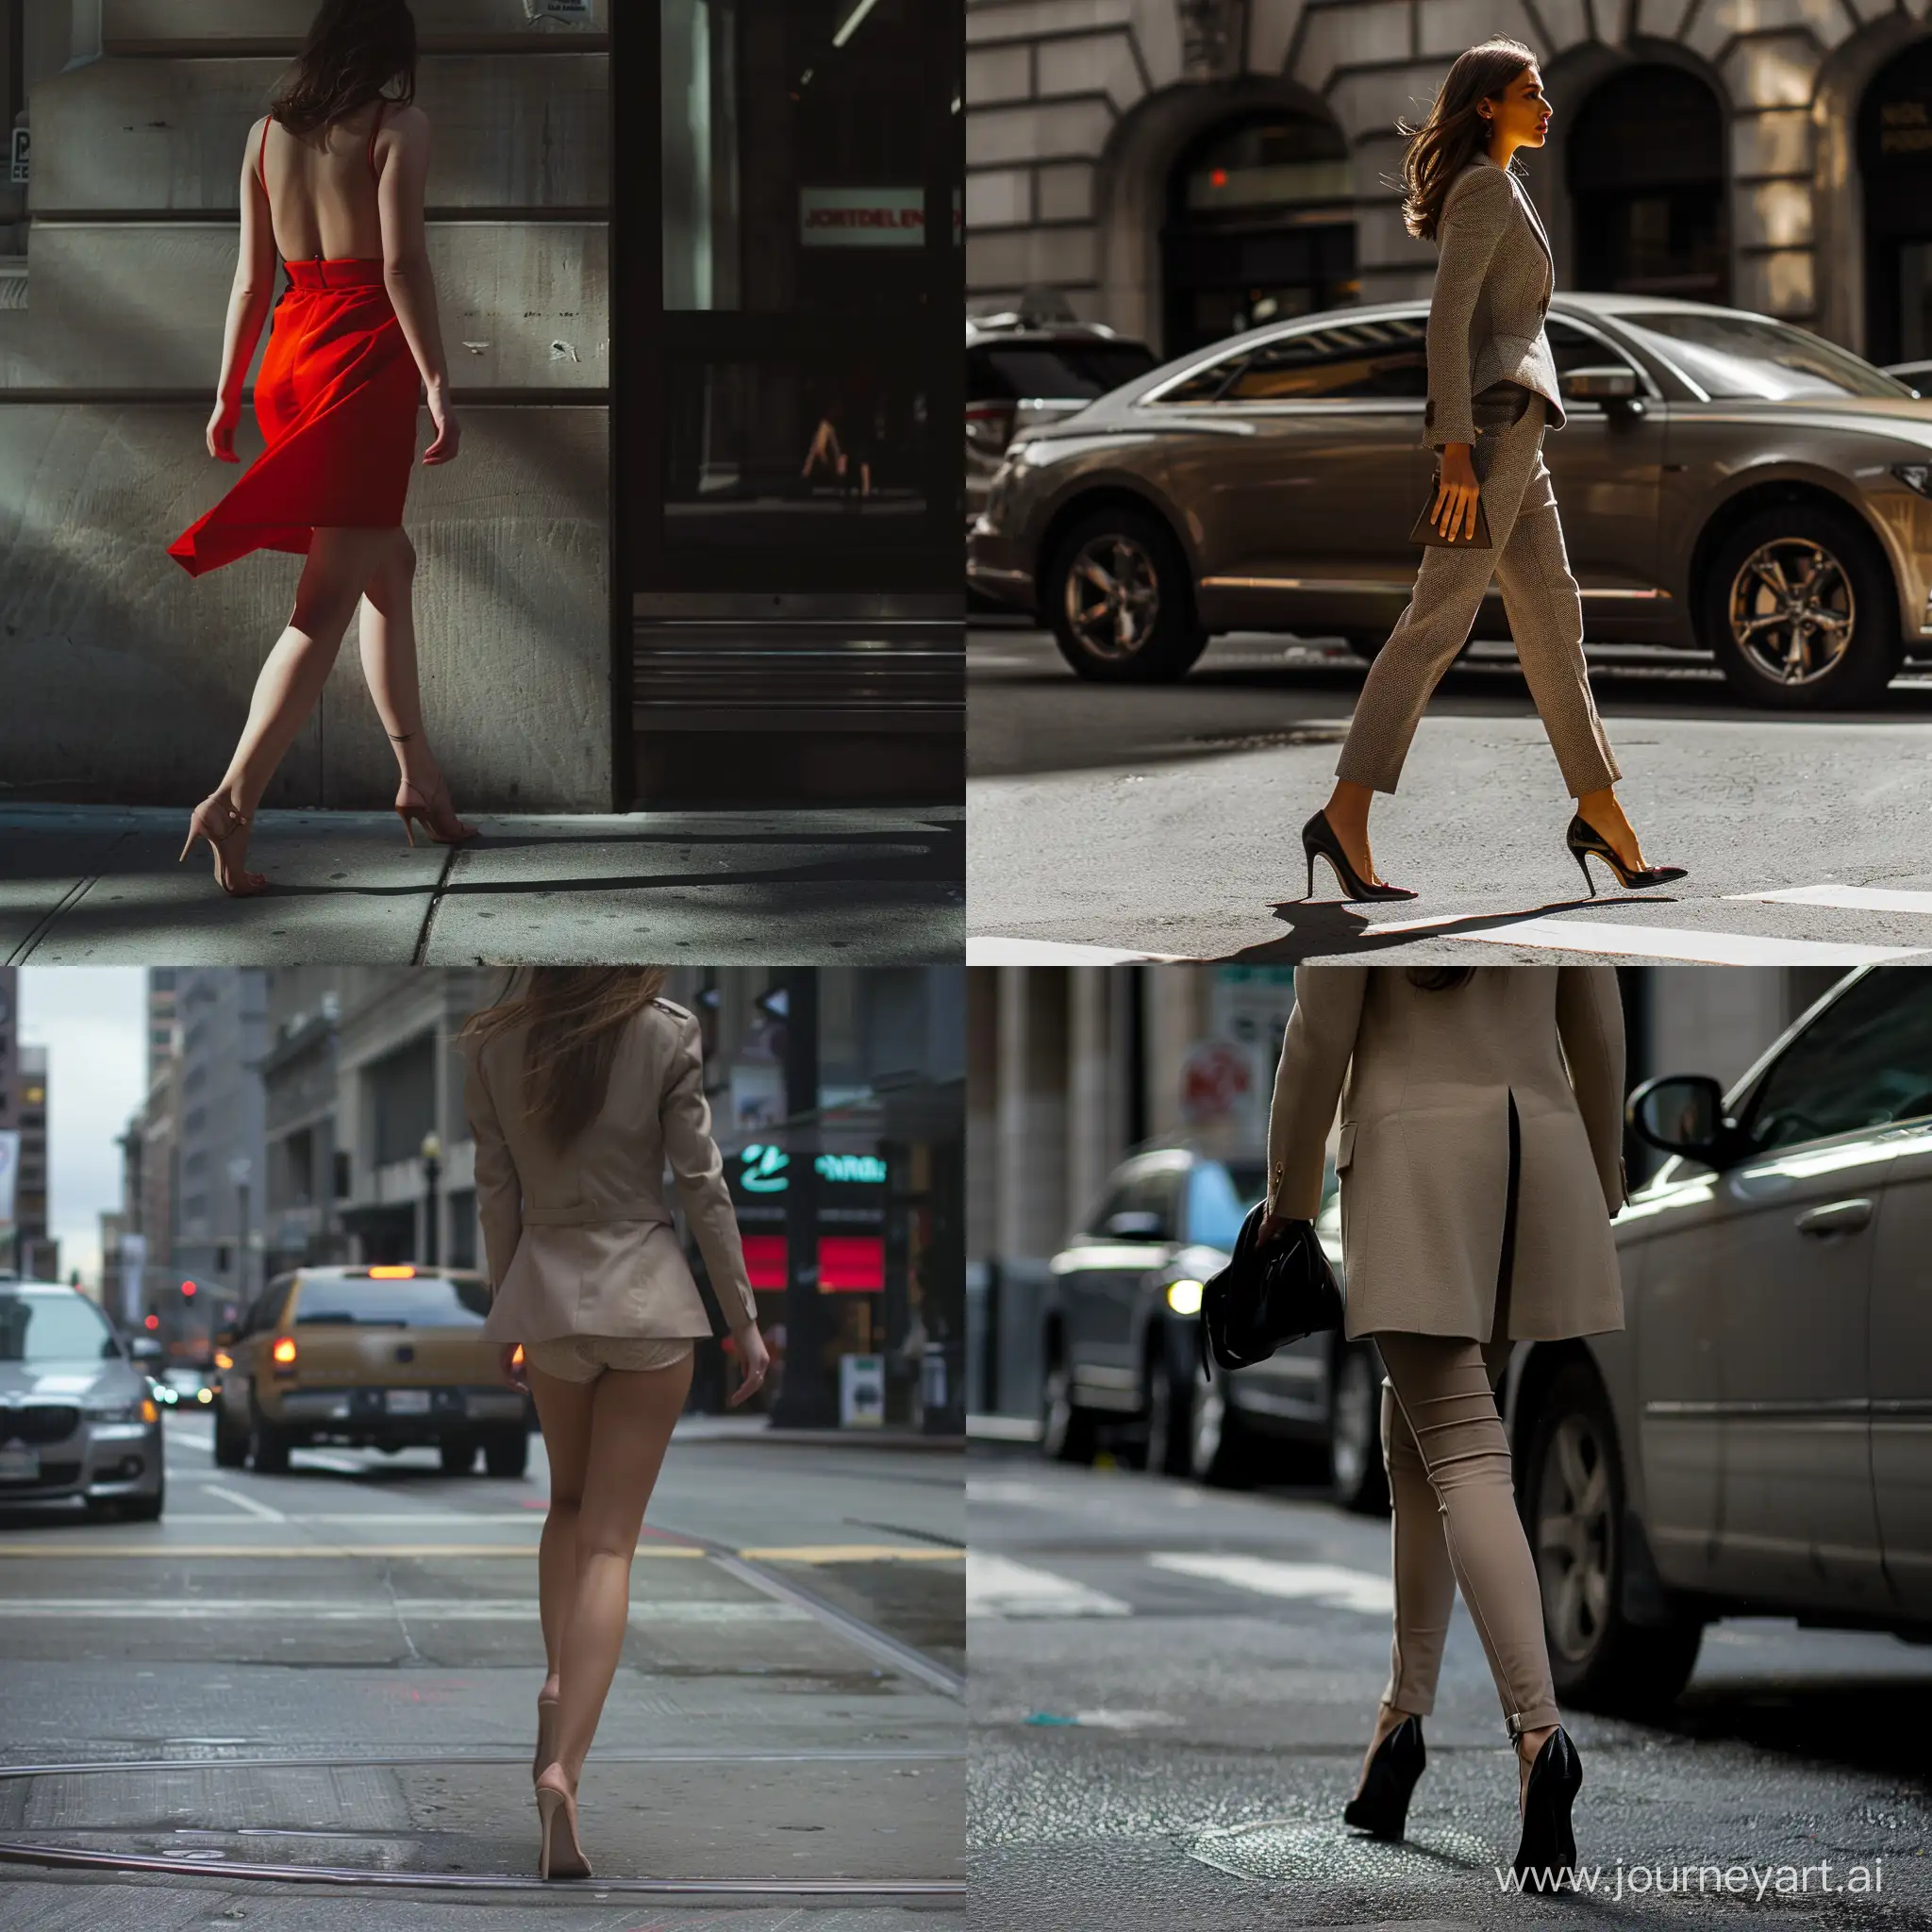 Graceful-Woman-Street-Fashion-Elegant-FullBody-Shot-with-Slender-Legs